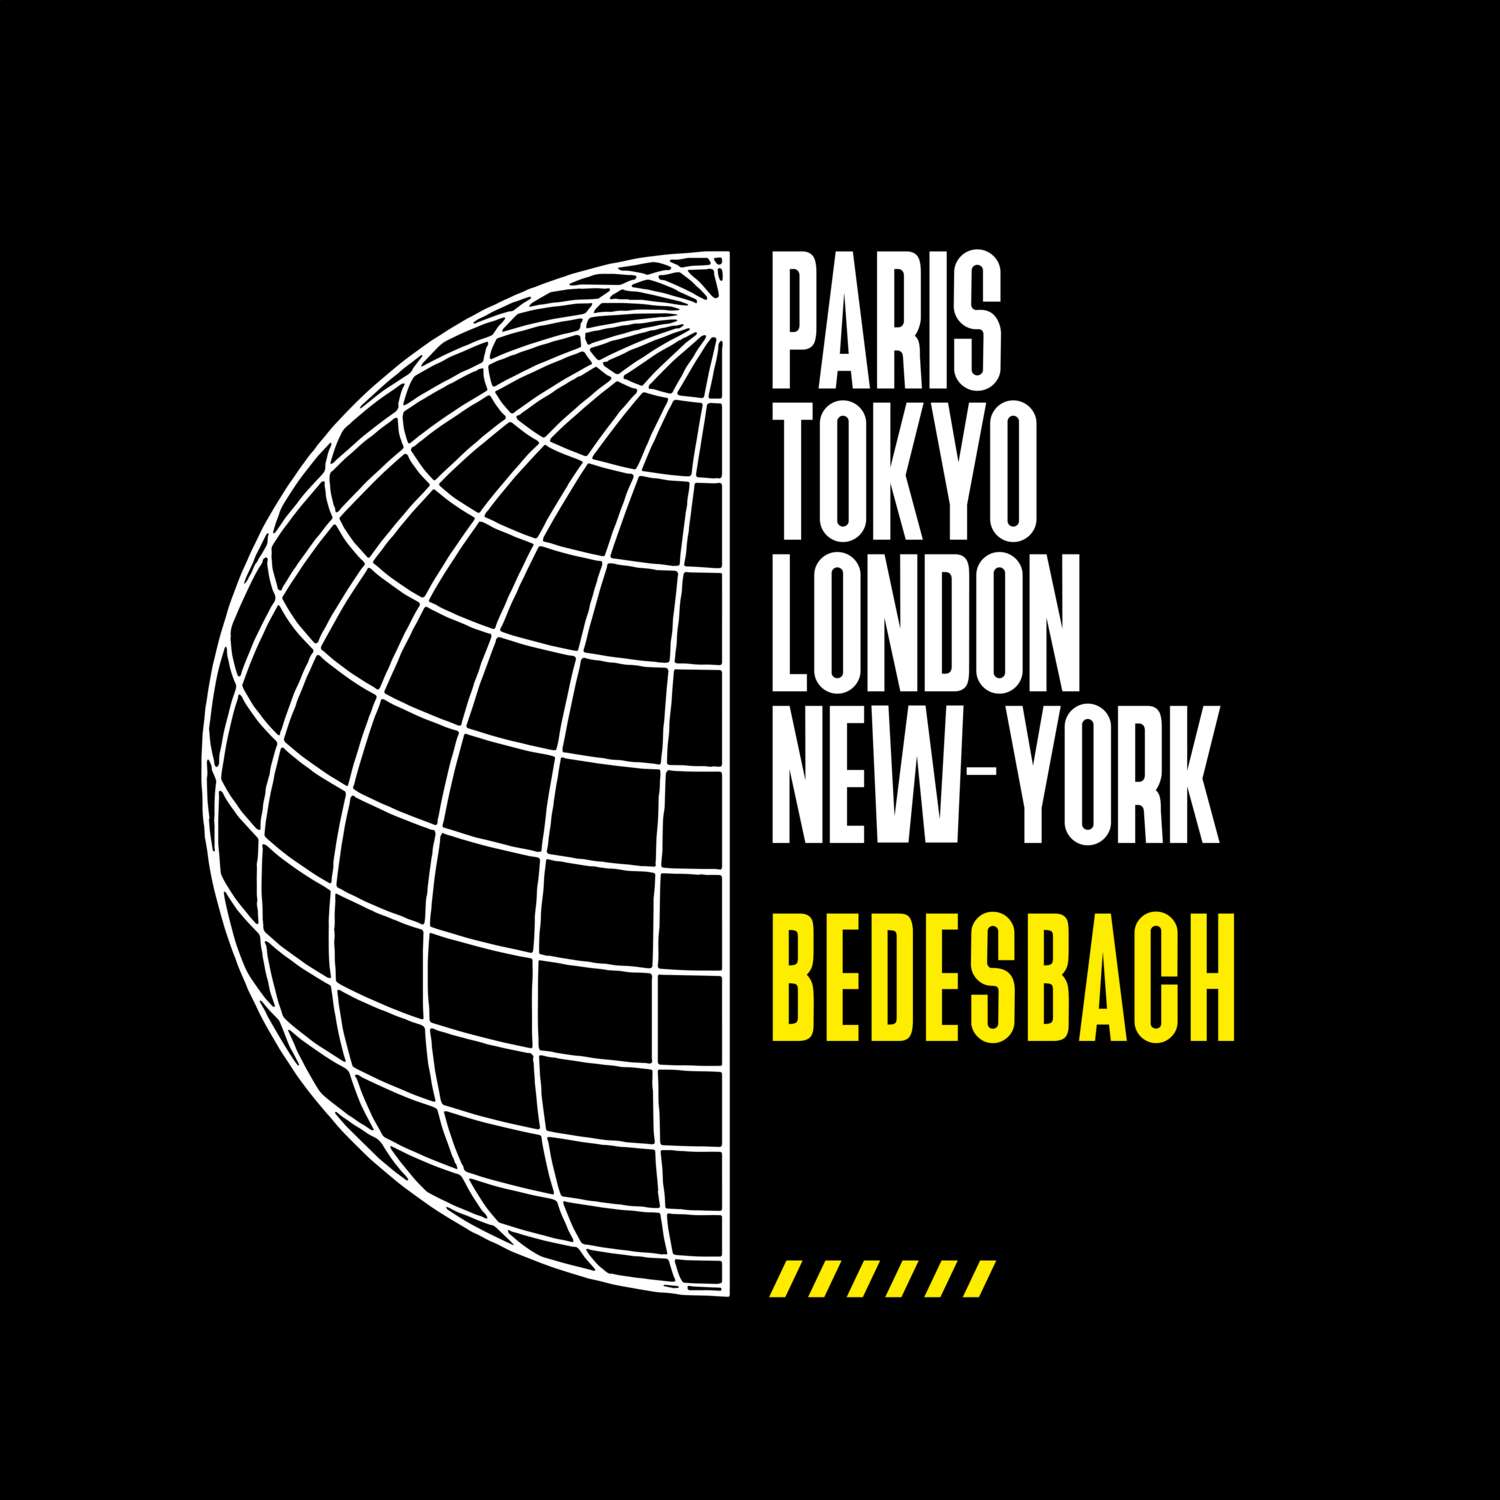 Bedesbach T-Shirt »Paris Tokyo London«